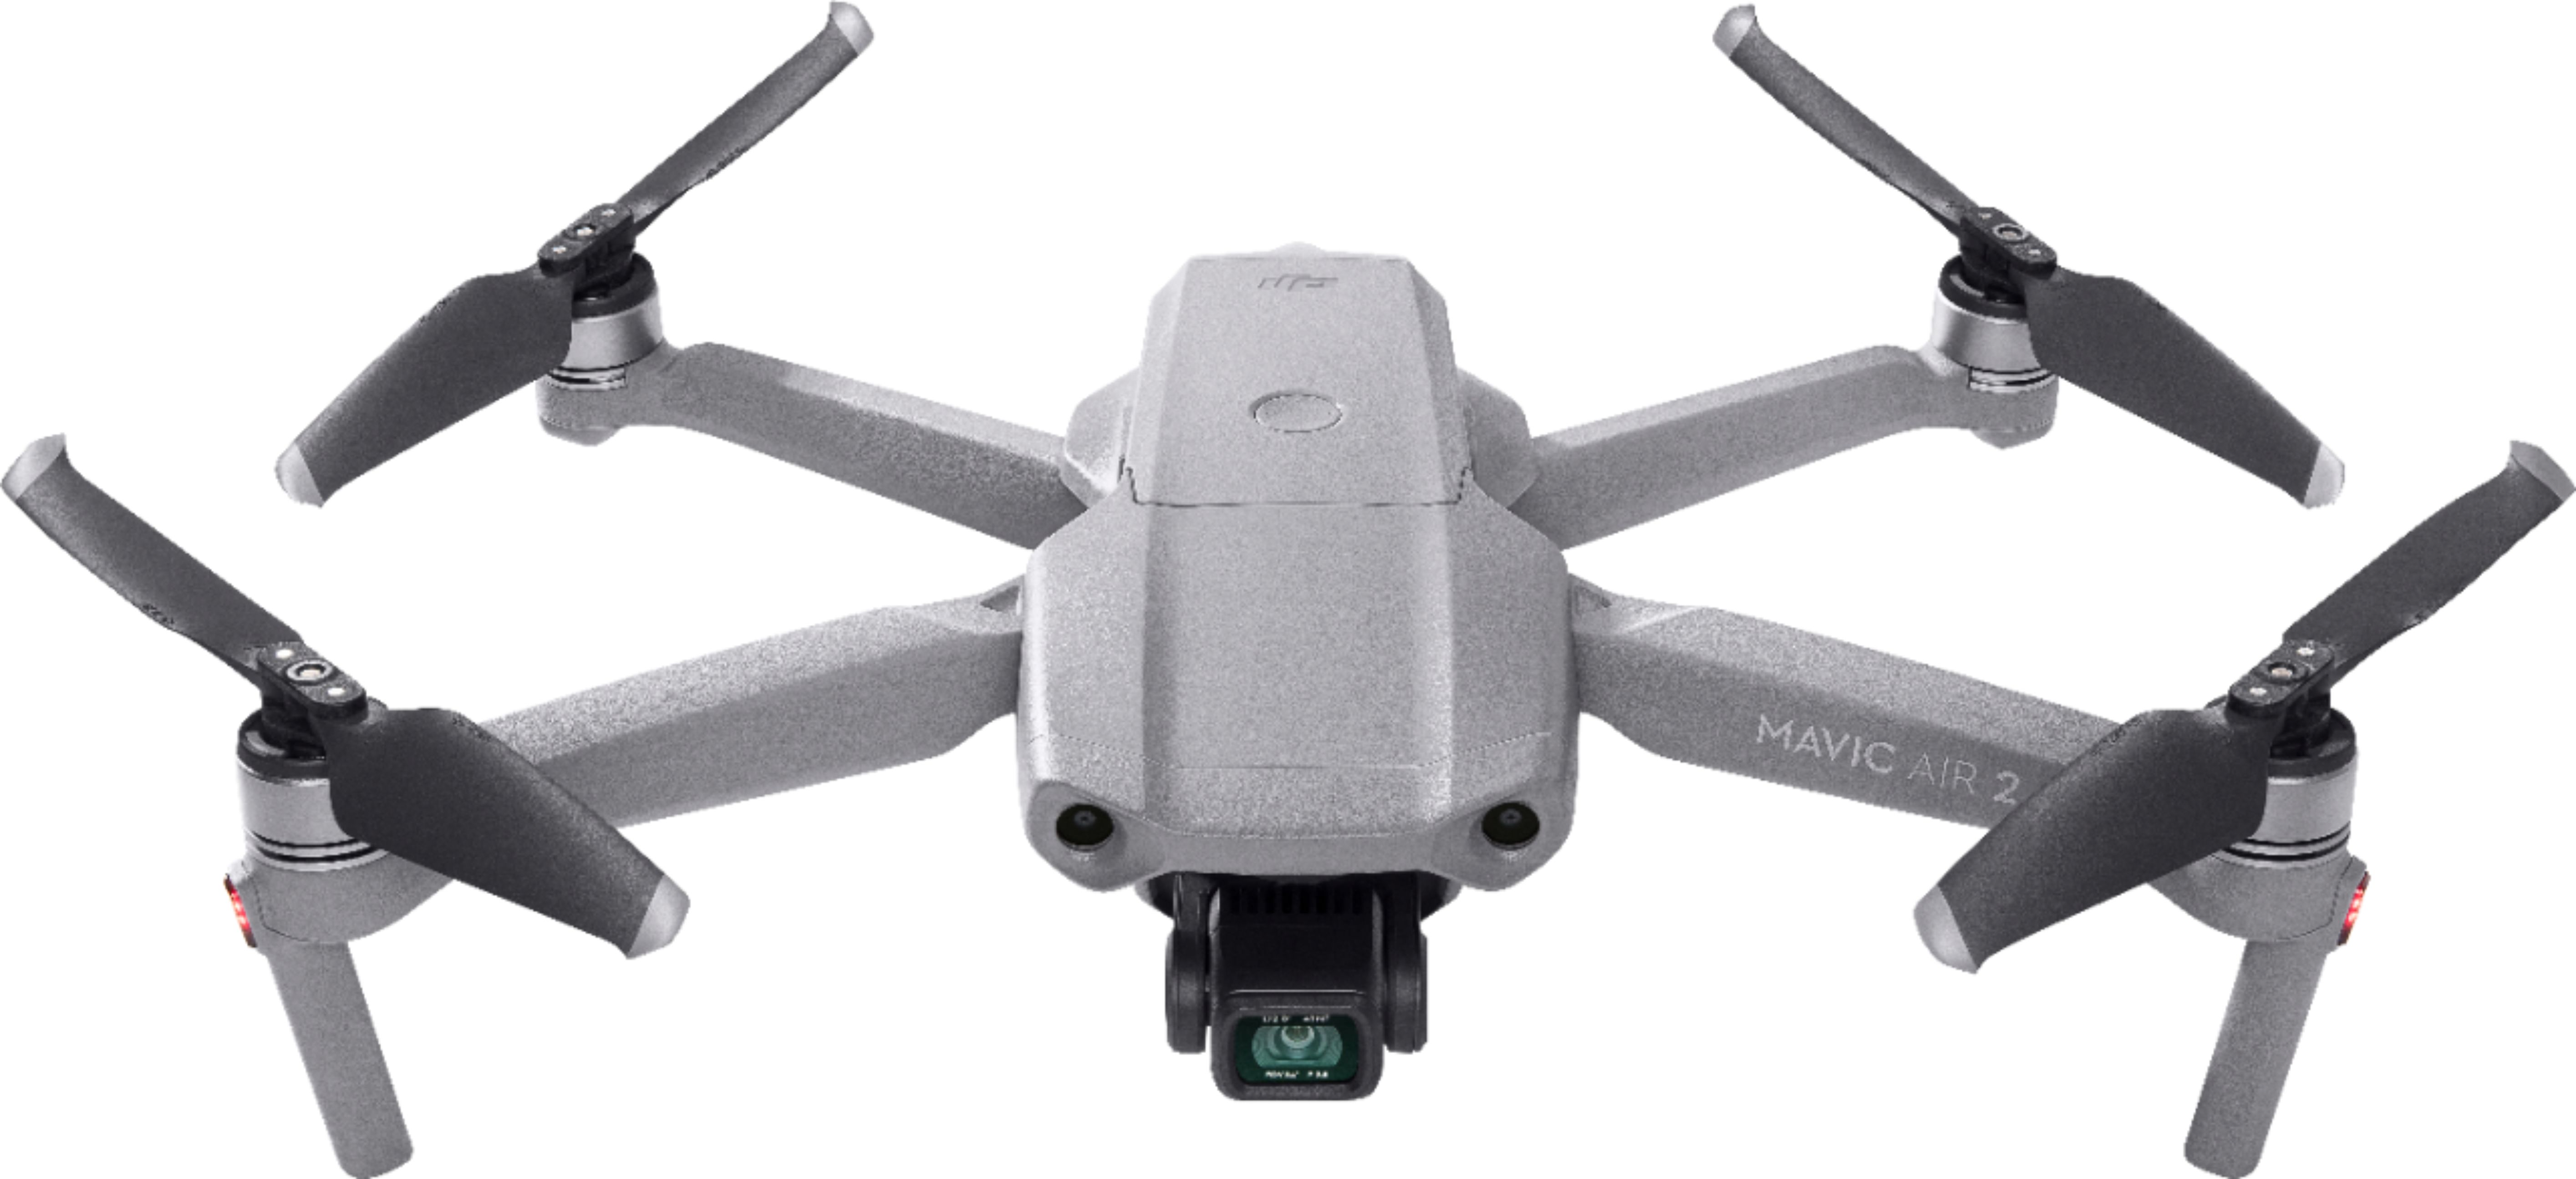 DJI Mavic Air 2 Drone with Remote 